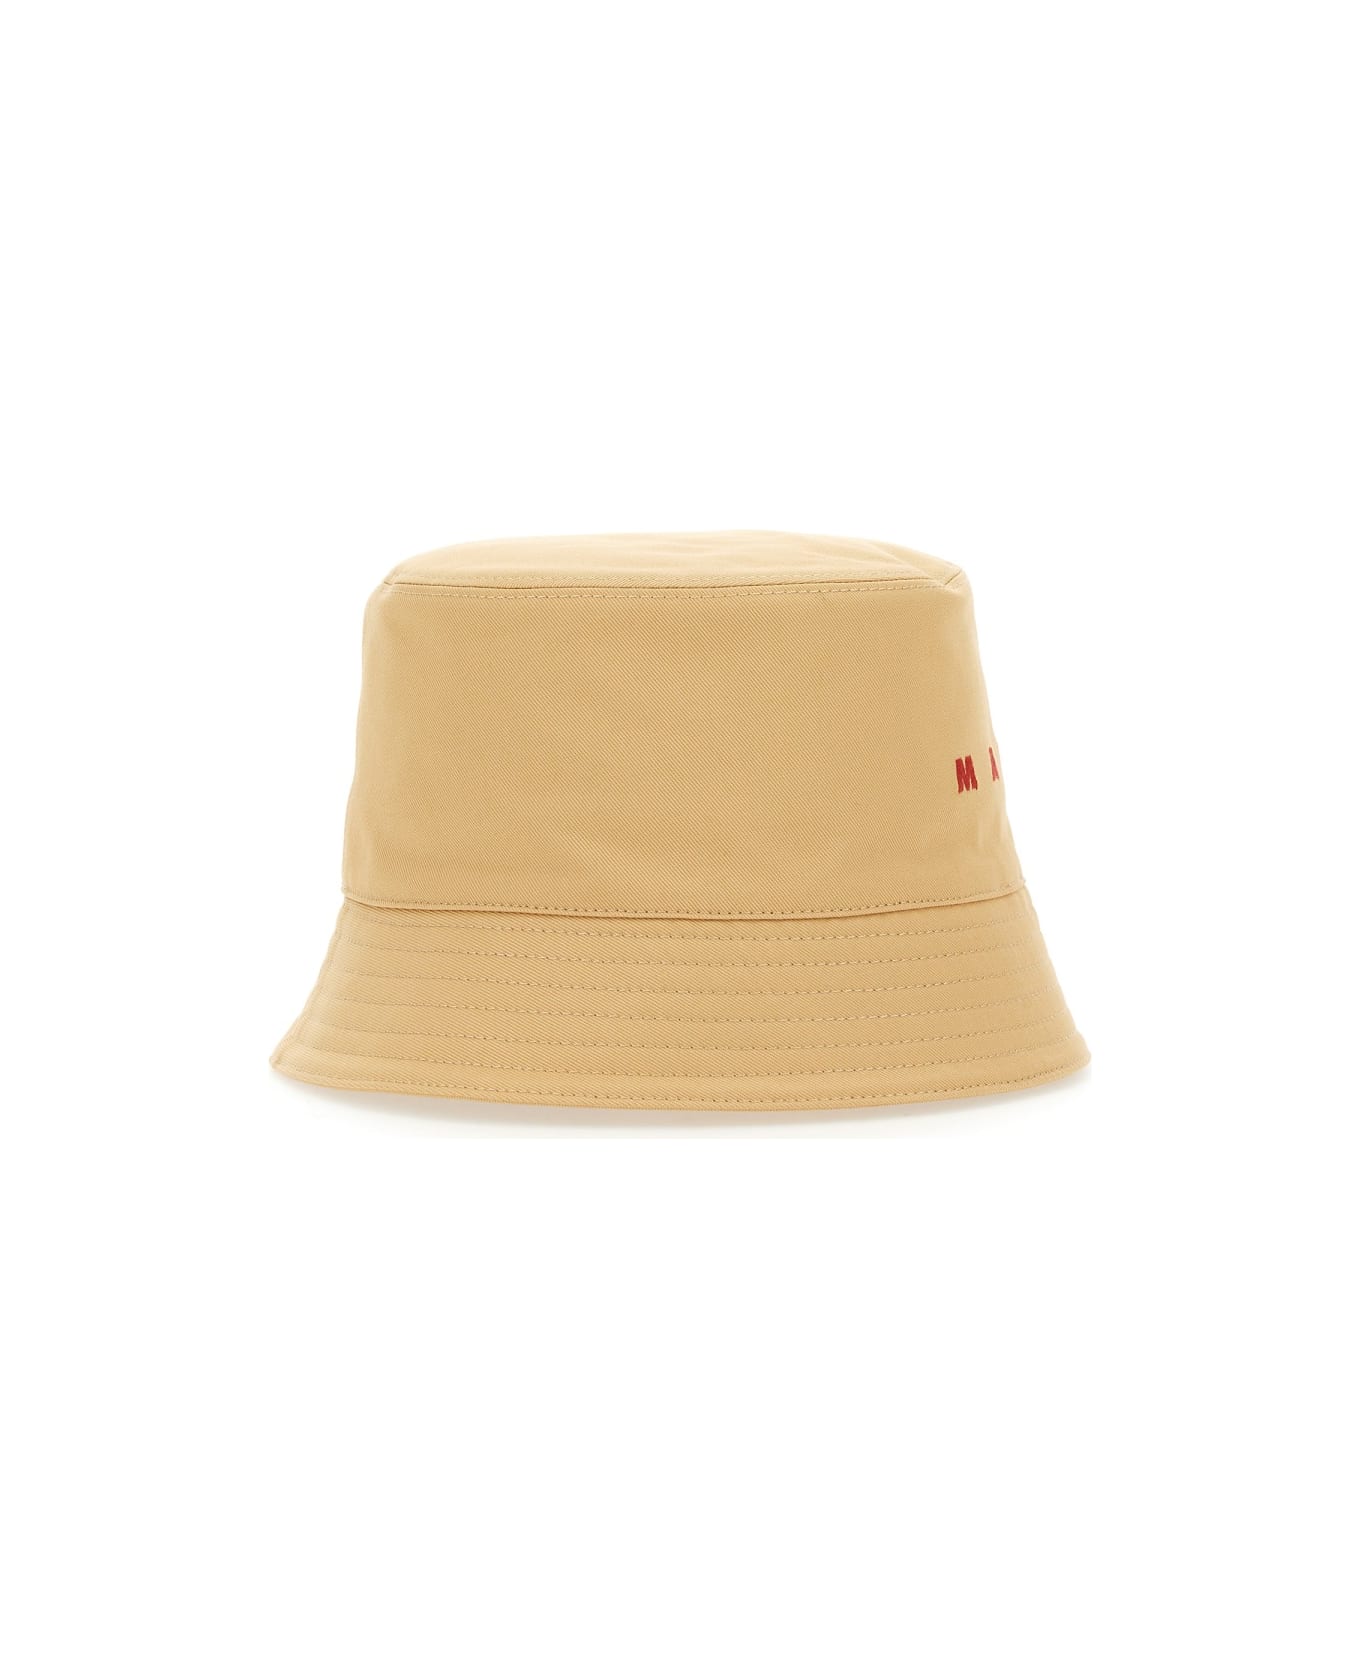 Marni Bucket Hat With Logo - BEIGE 帽子